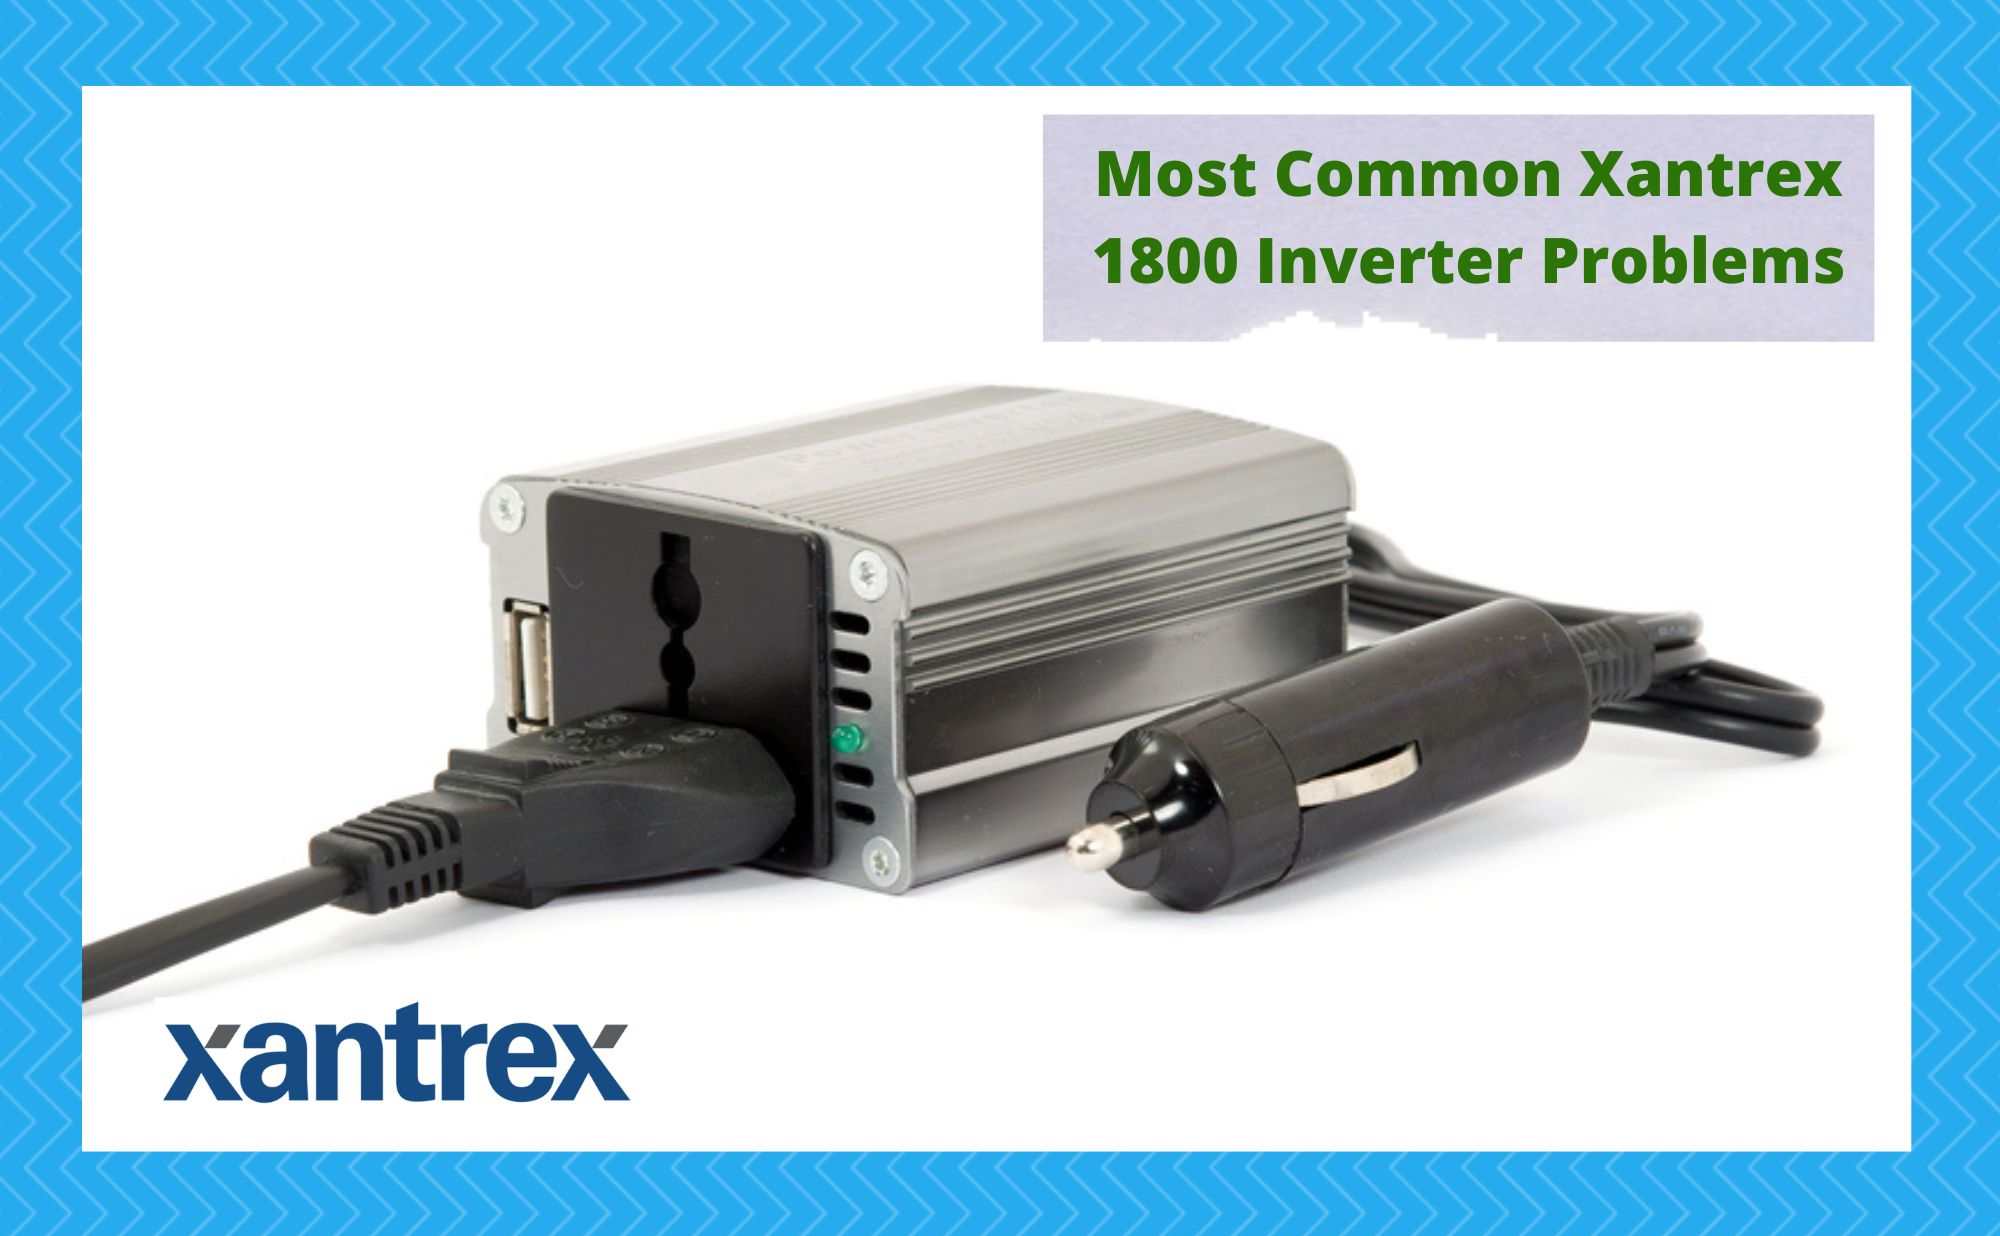 xantrex 1800 inverter problems